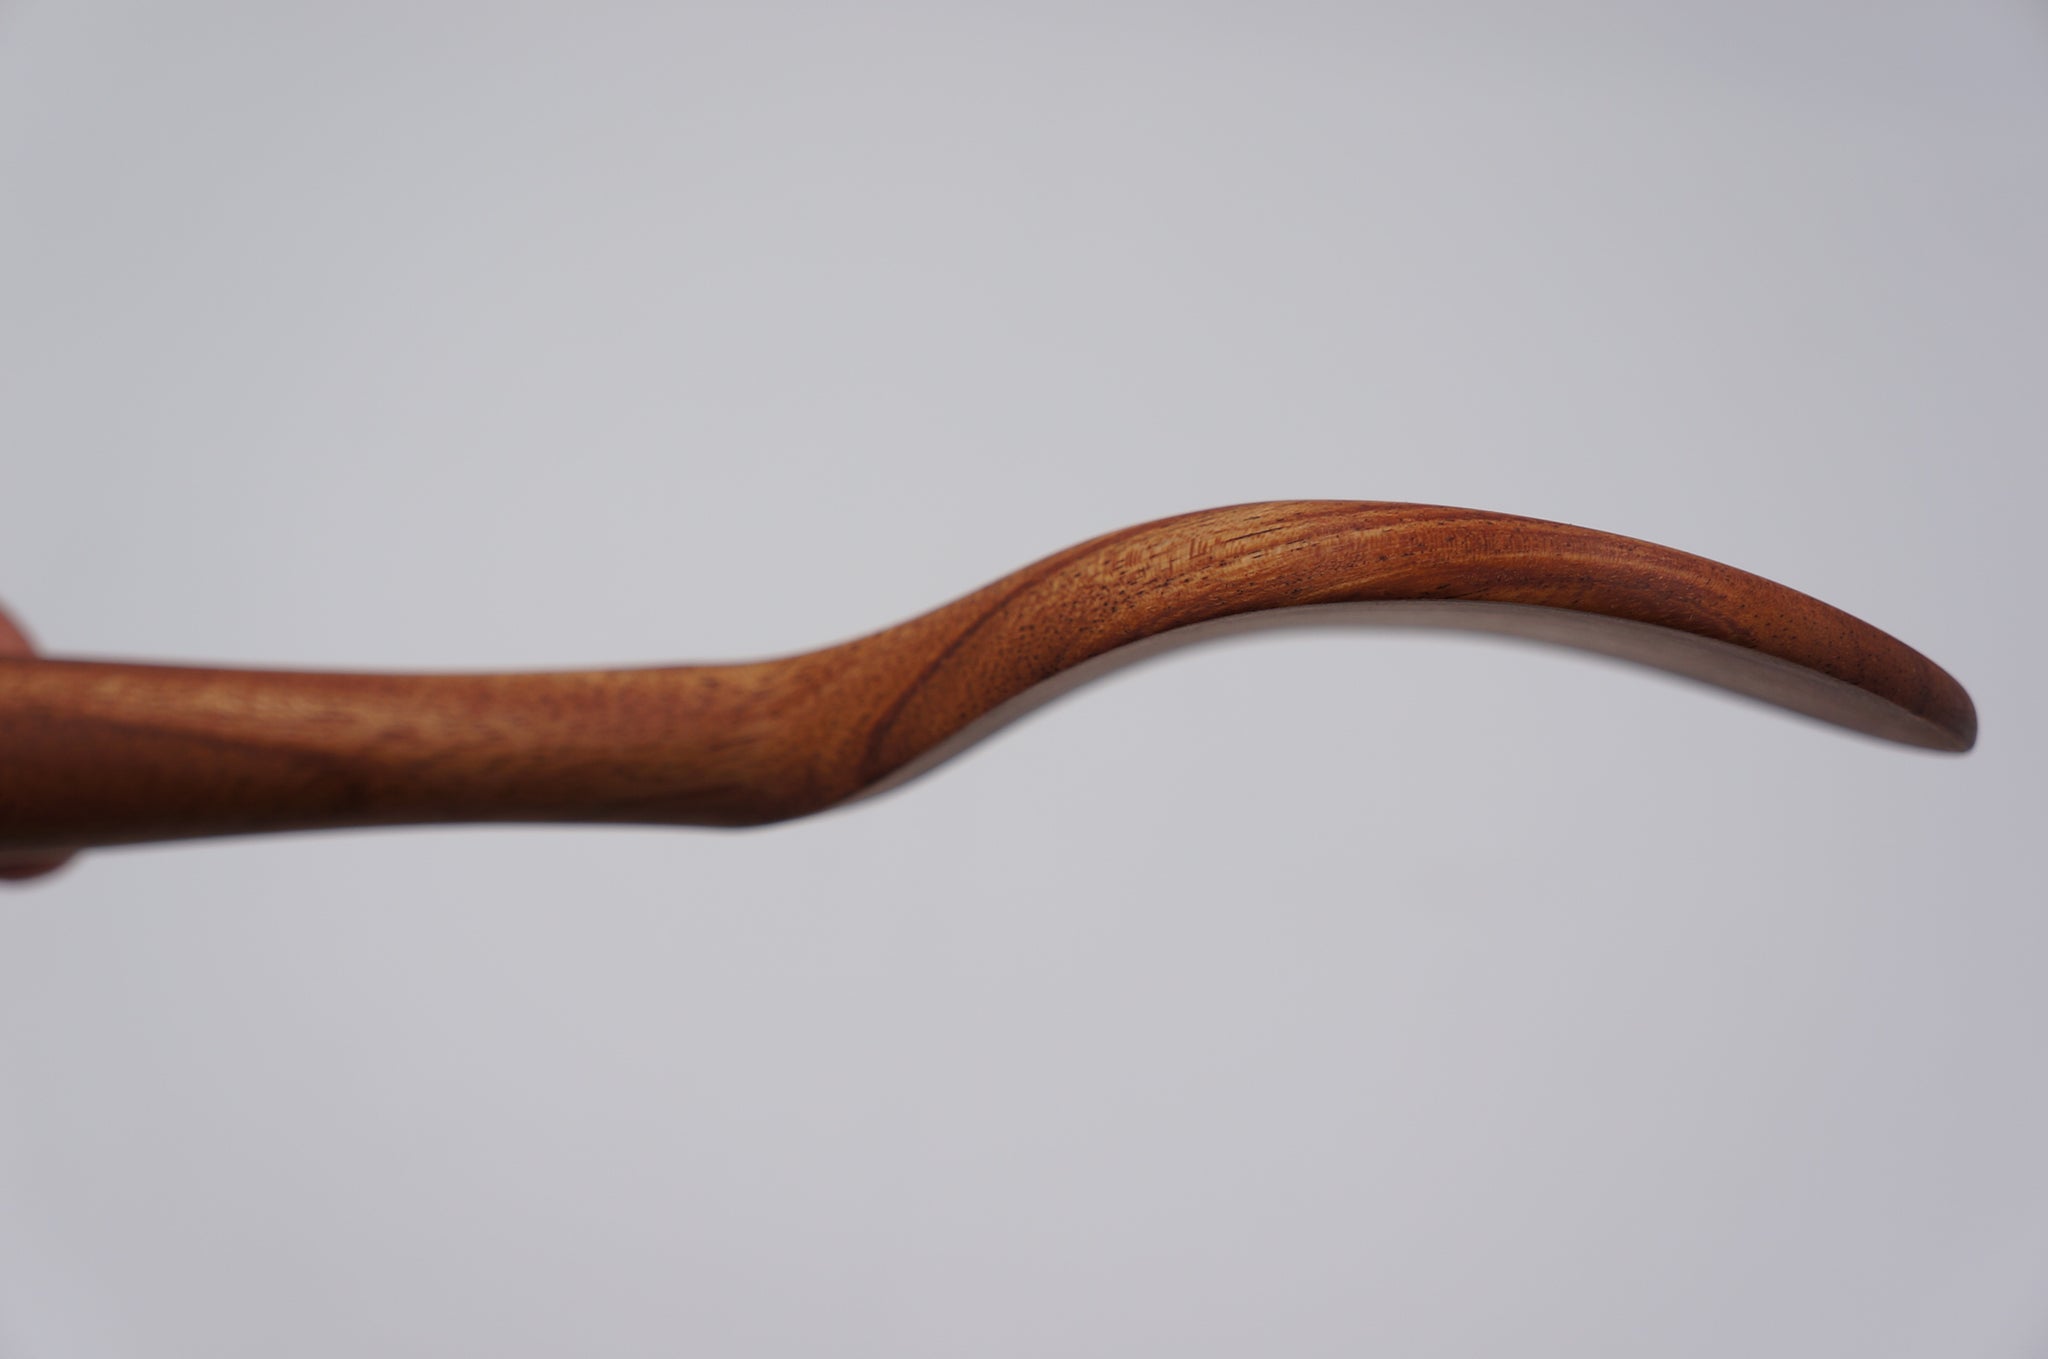 Handmade Wooden Rice Spoons